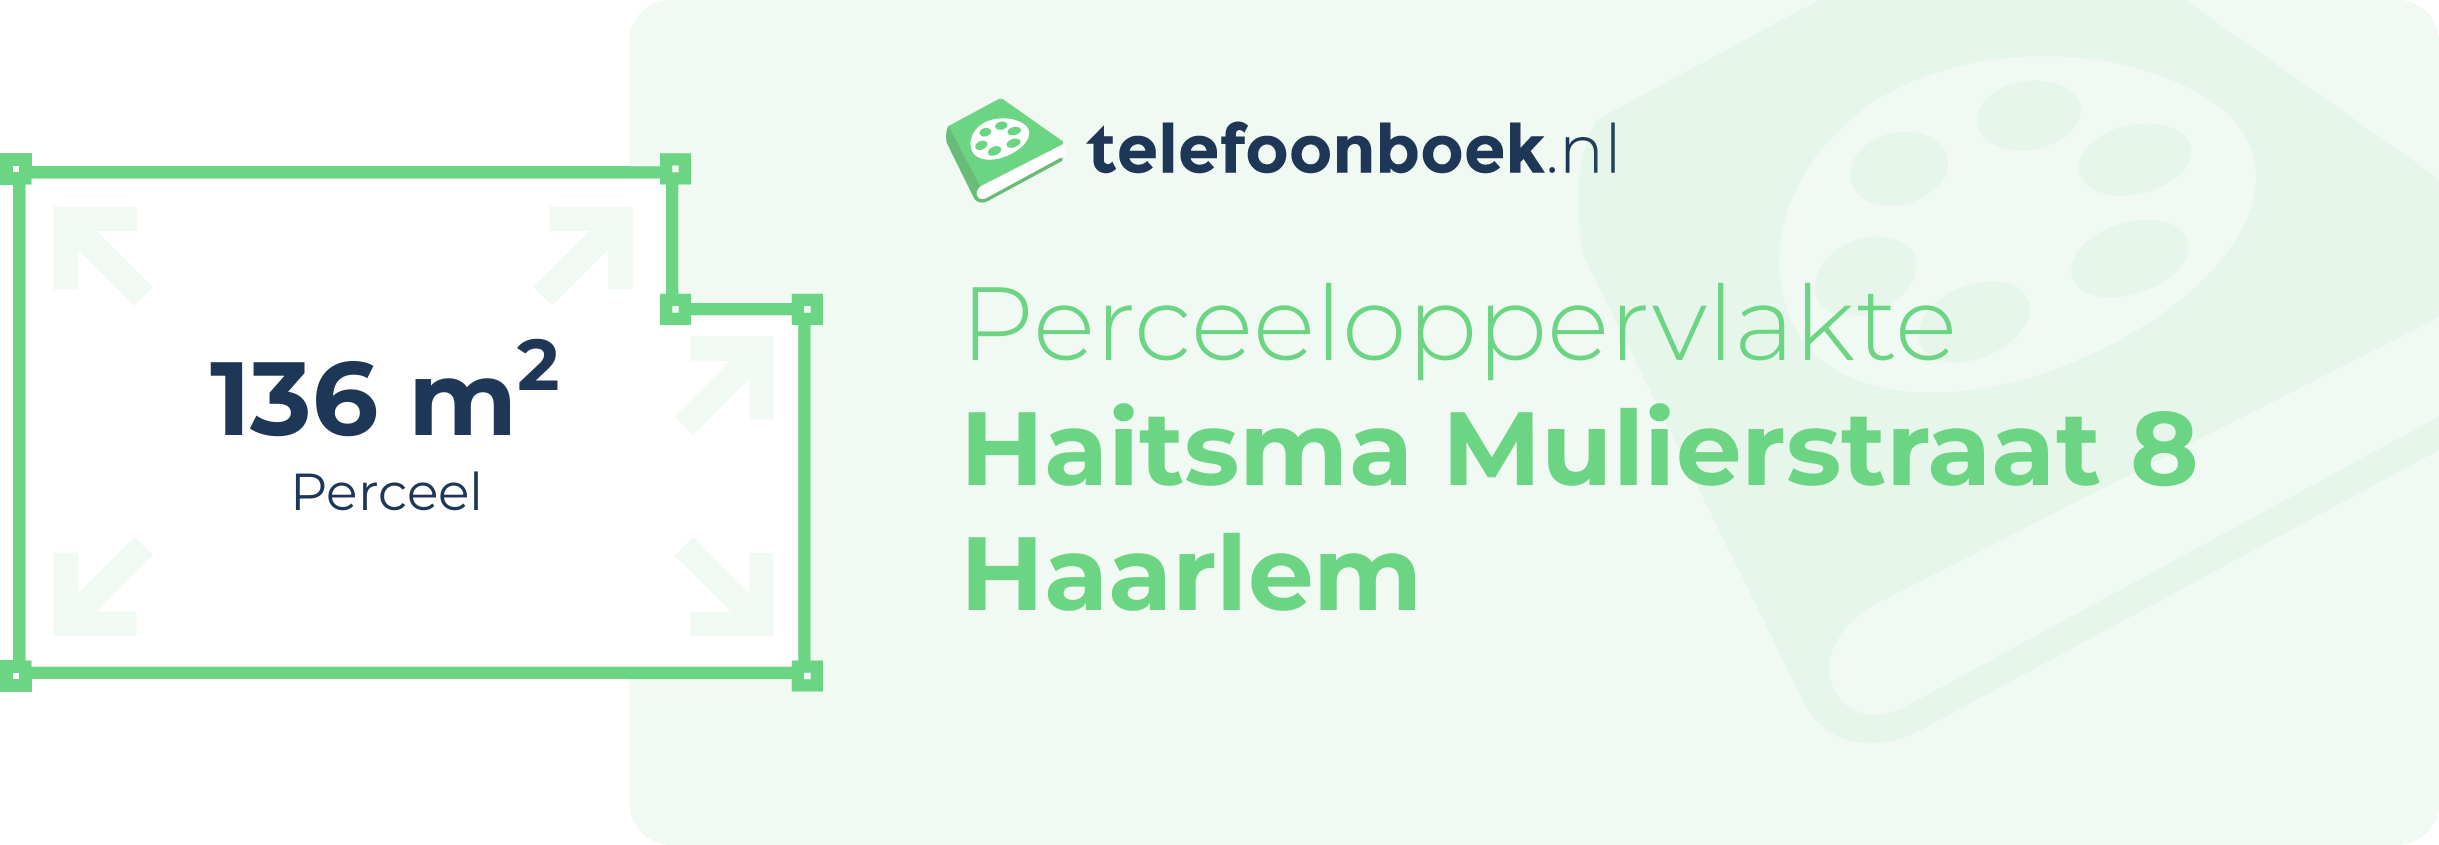 Perceeloppervlakte Haitsma Mulierstraat 8 Haarlem